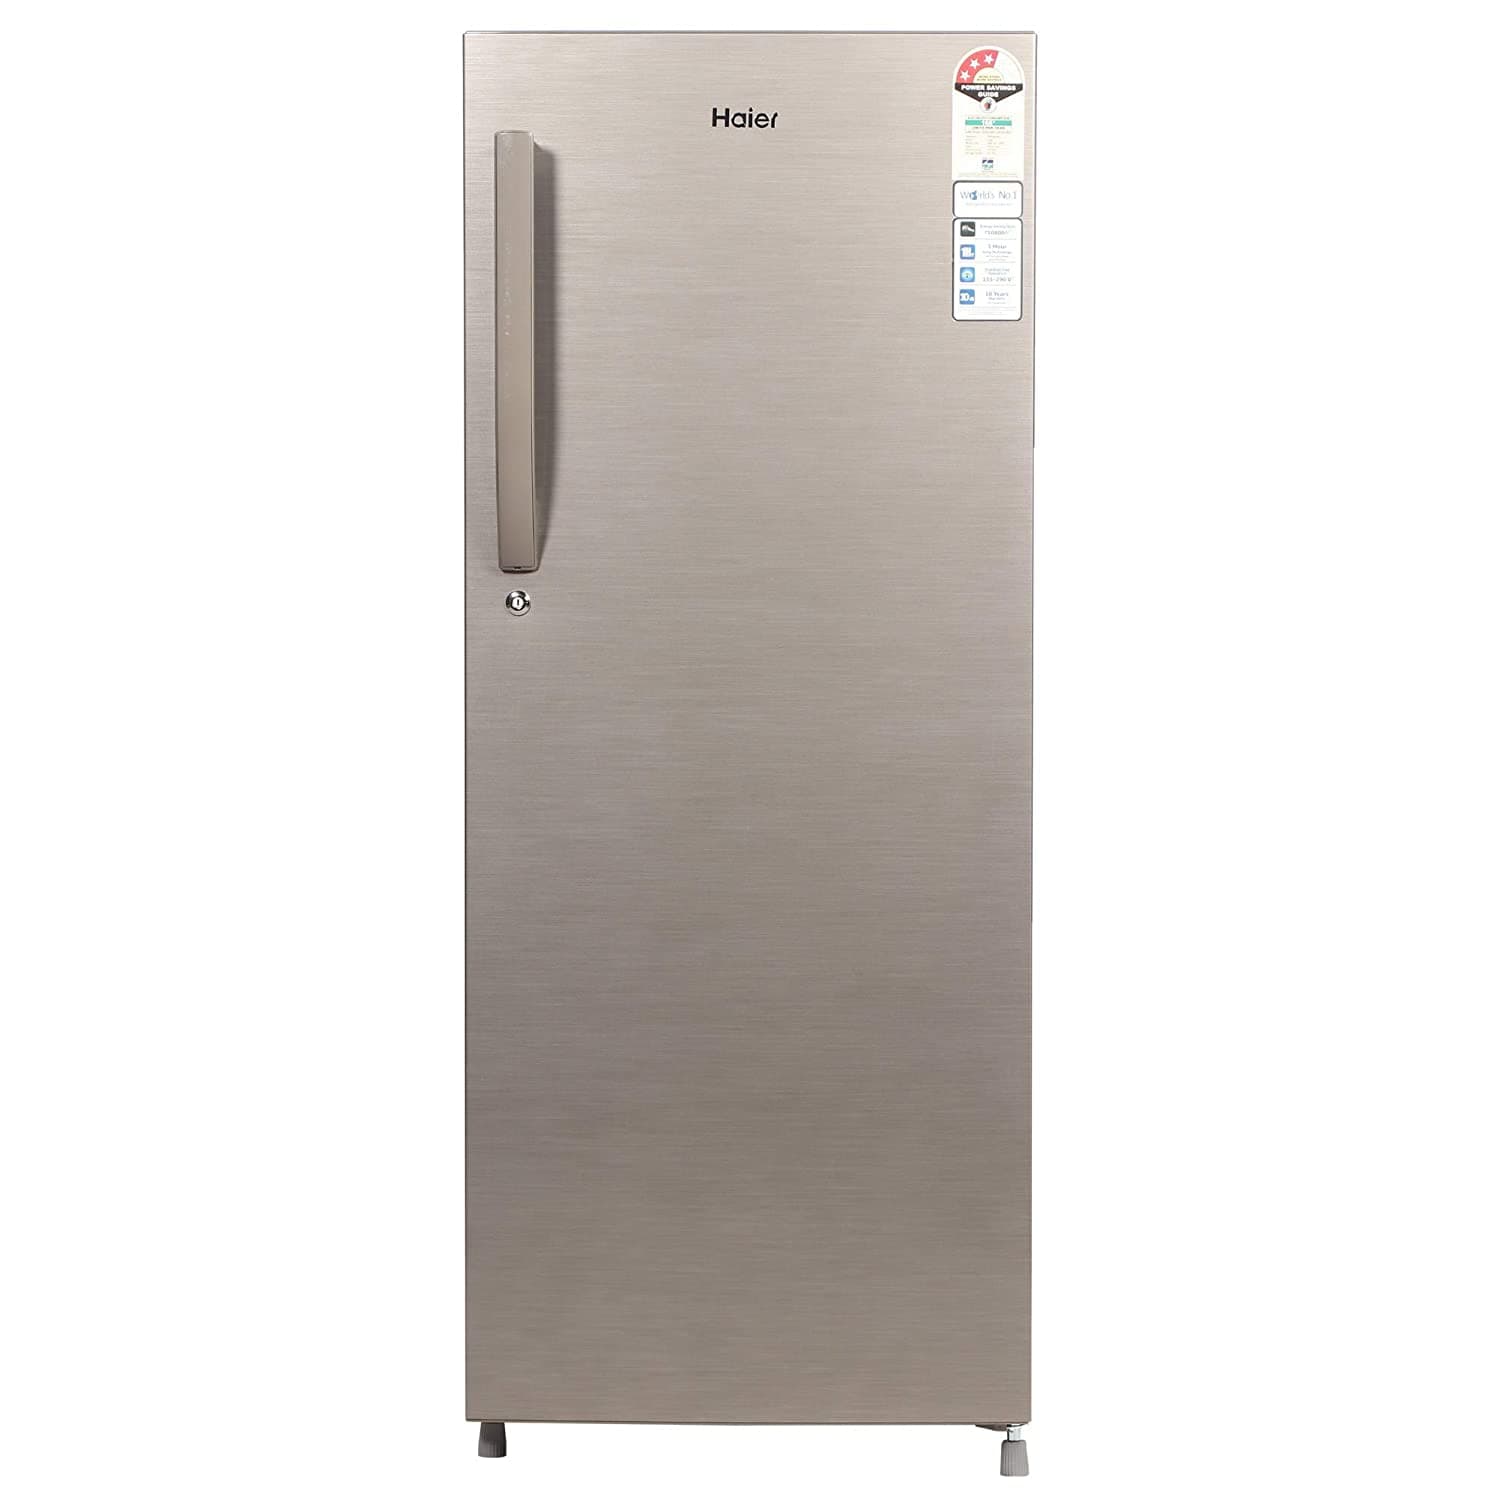 Haier HED-22TDS 220 Ltr Single Door Refrigerator